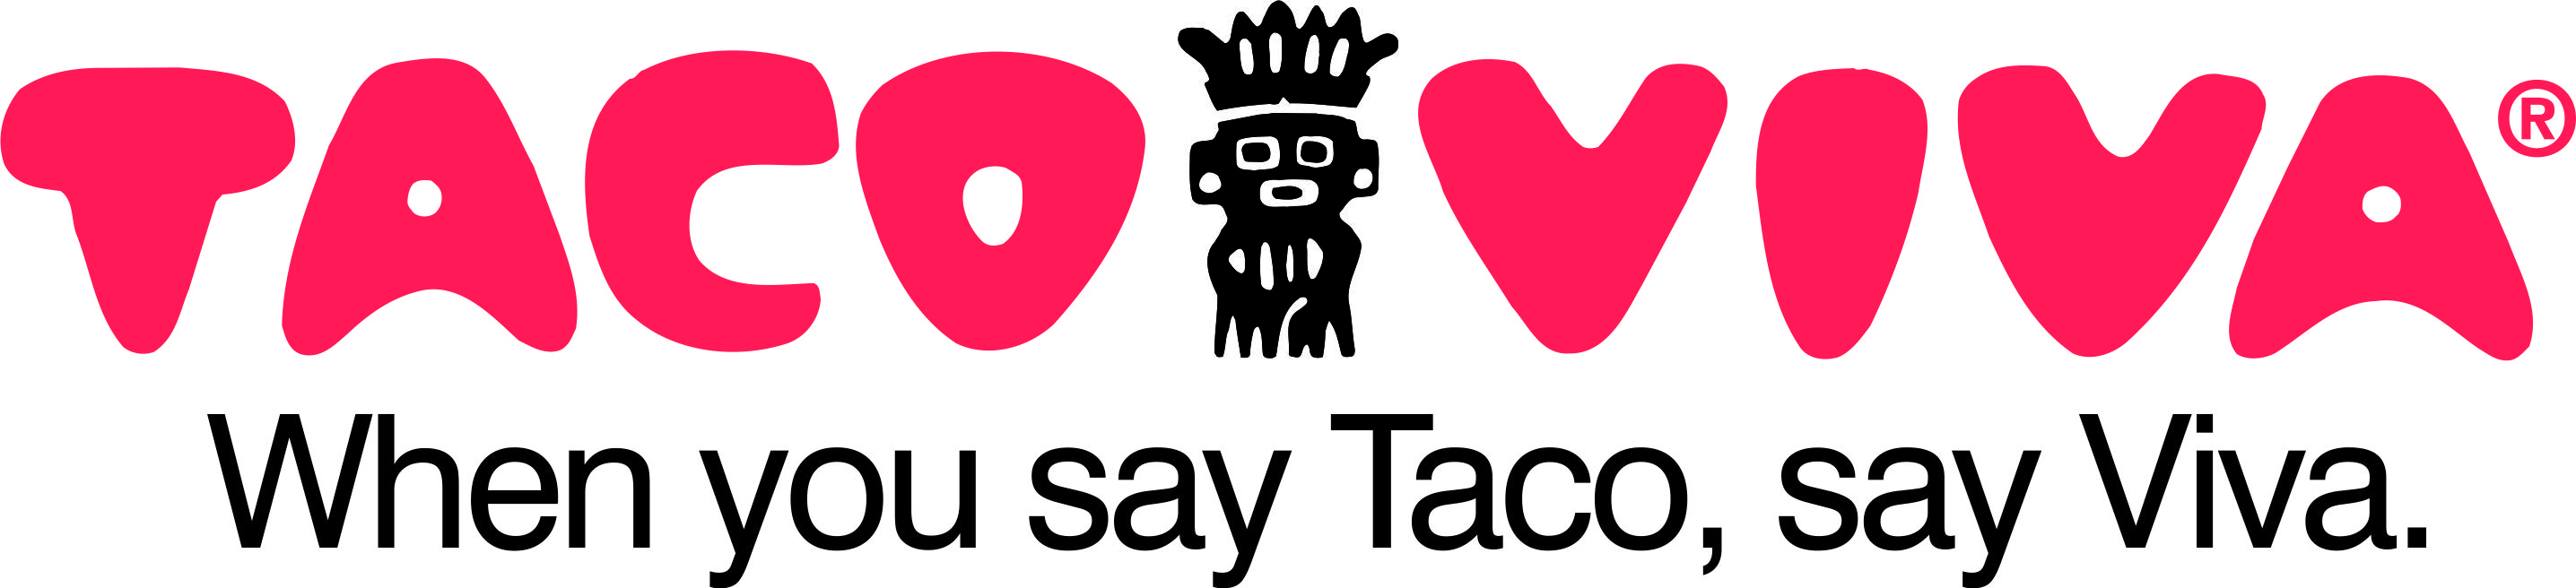 Taco Viva logo